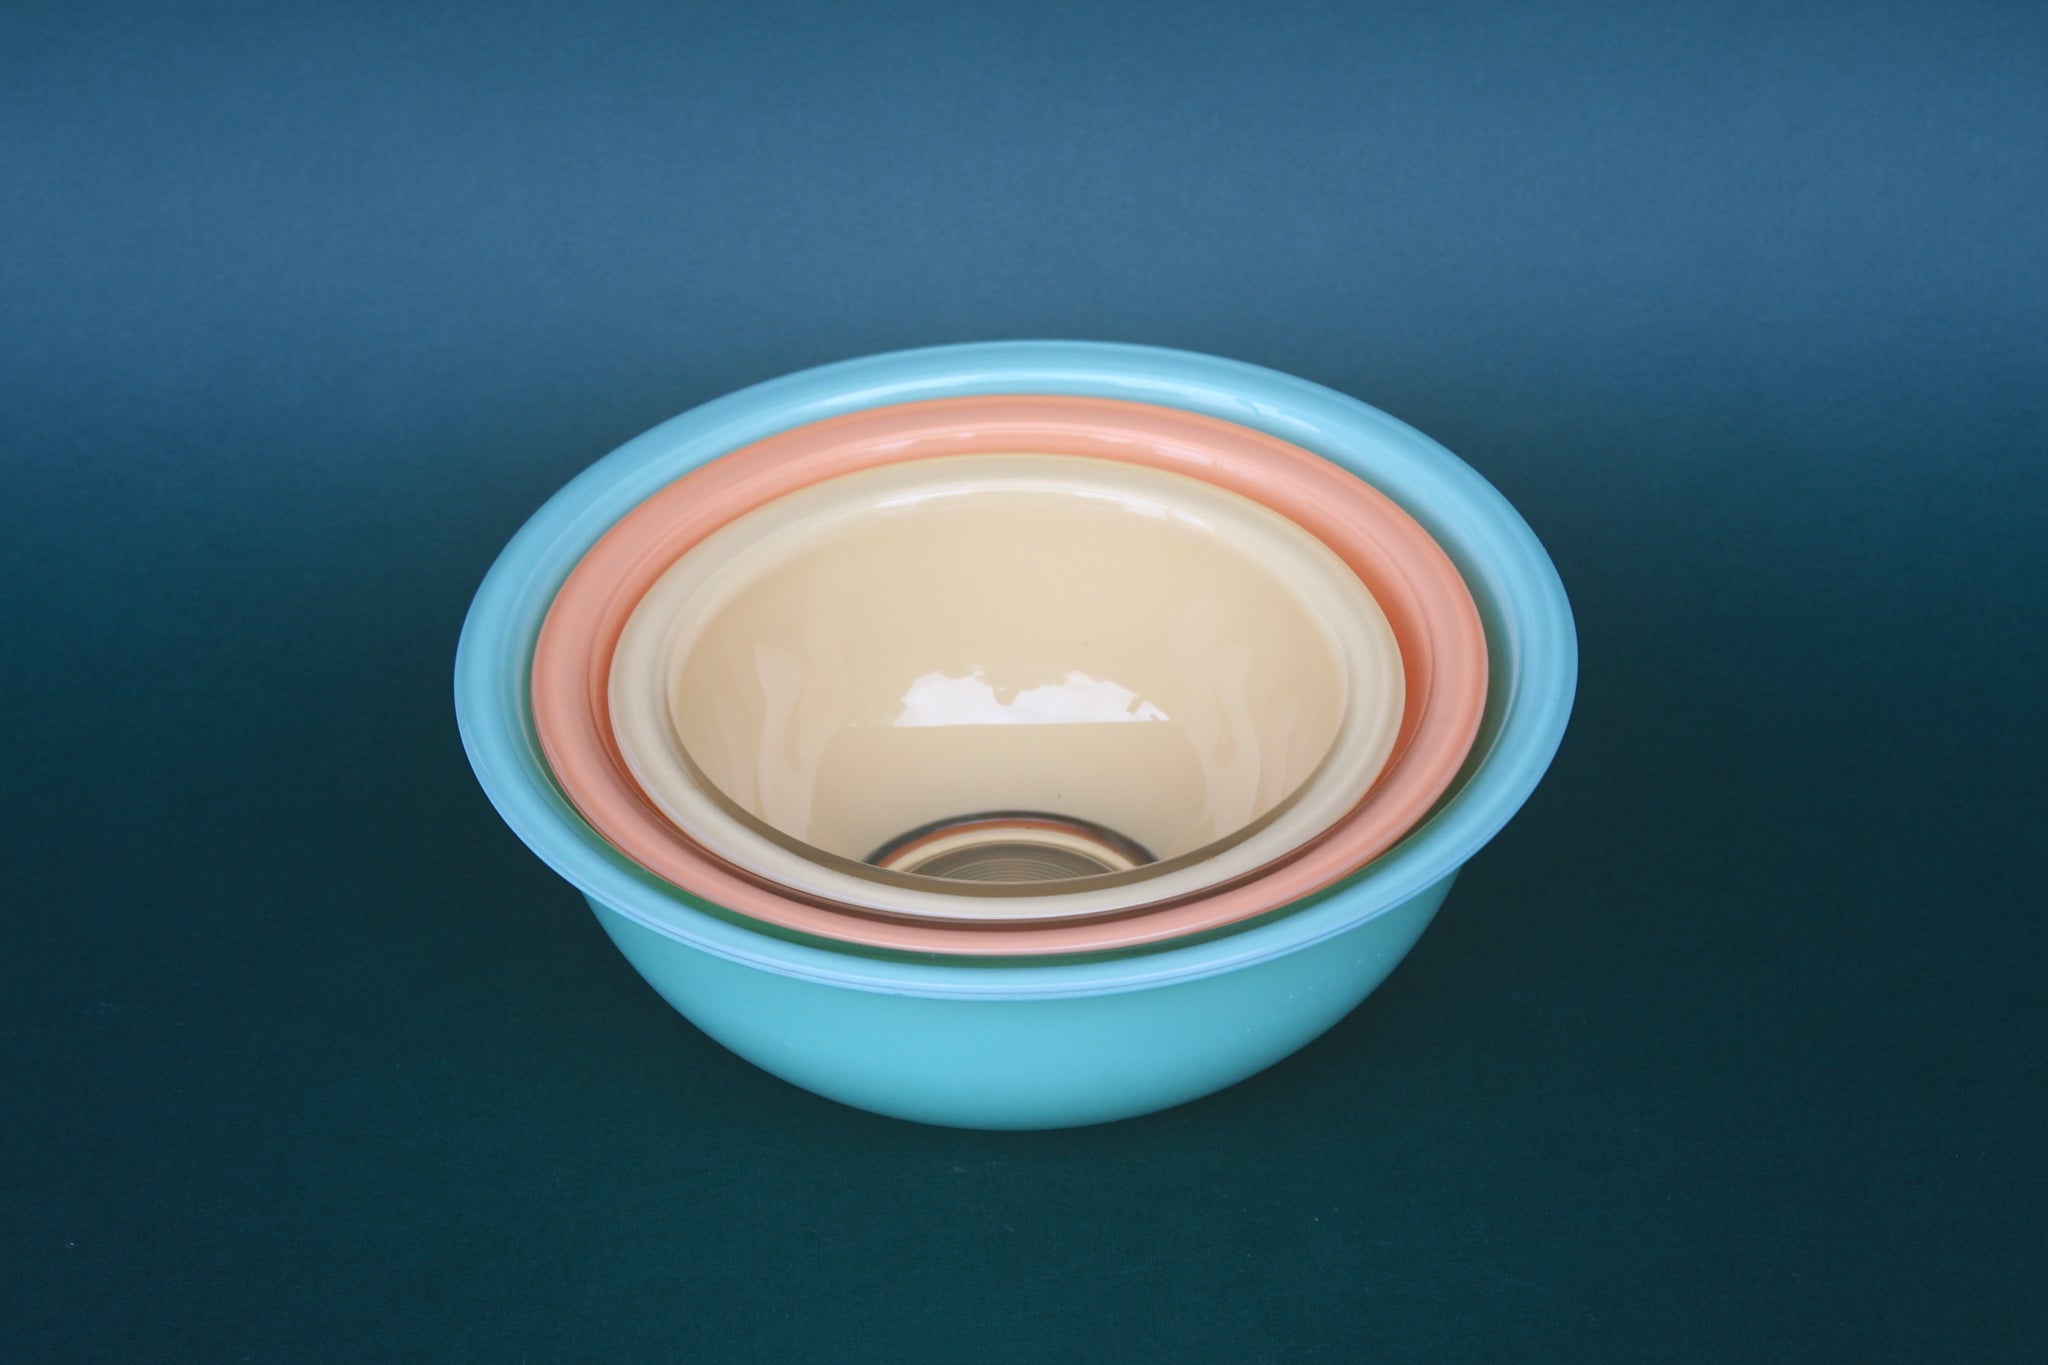 Set of 3 Vintage Pyrex Nesting Bowls in Pastel Colors